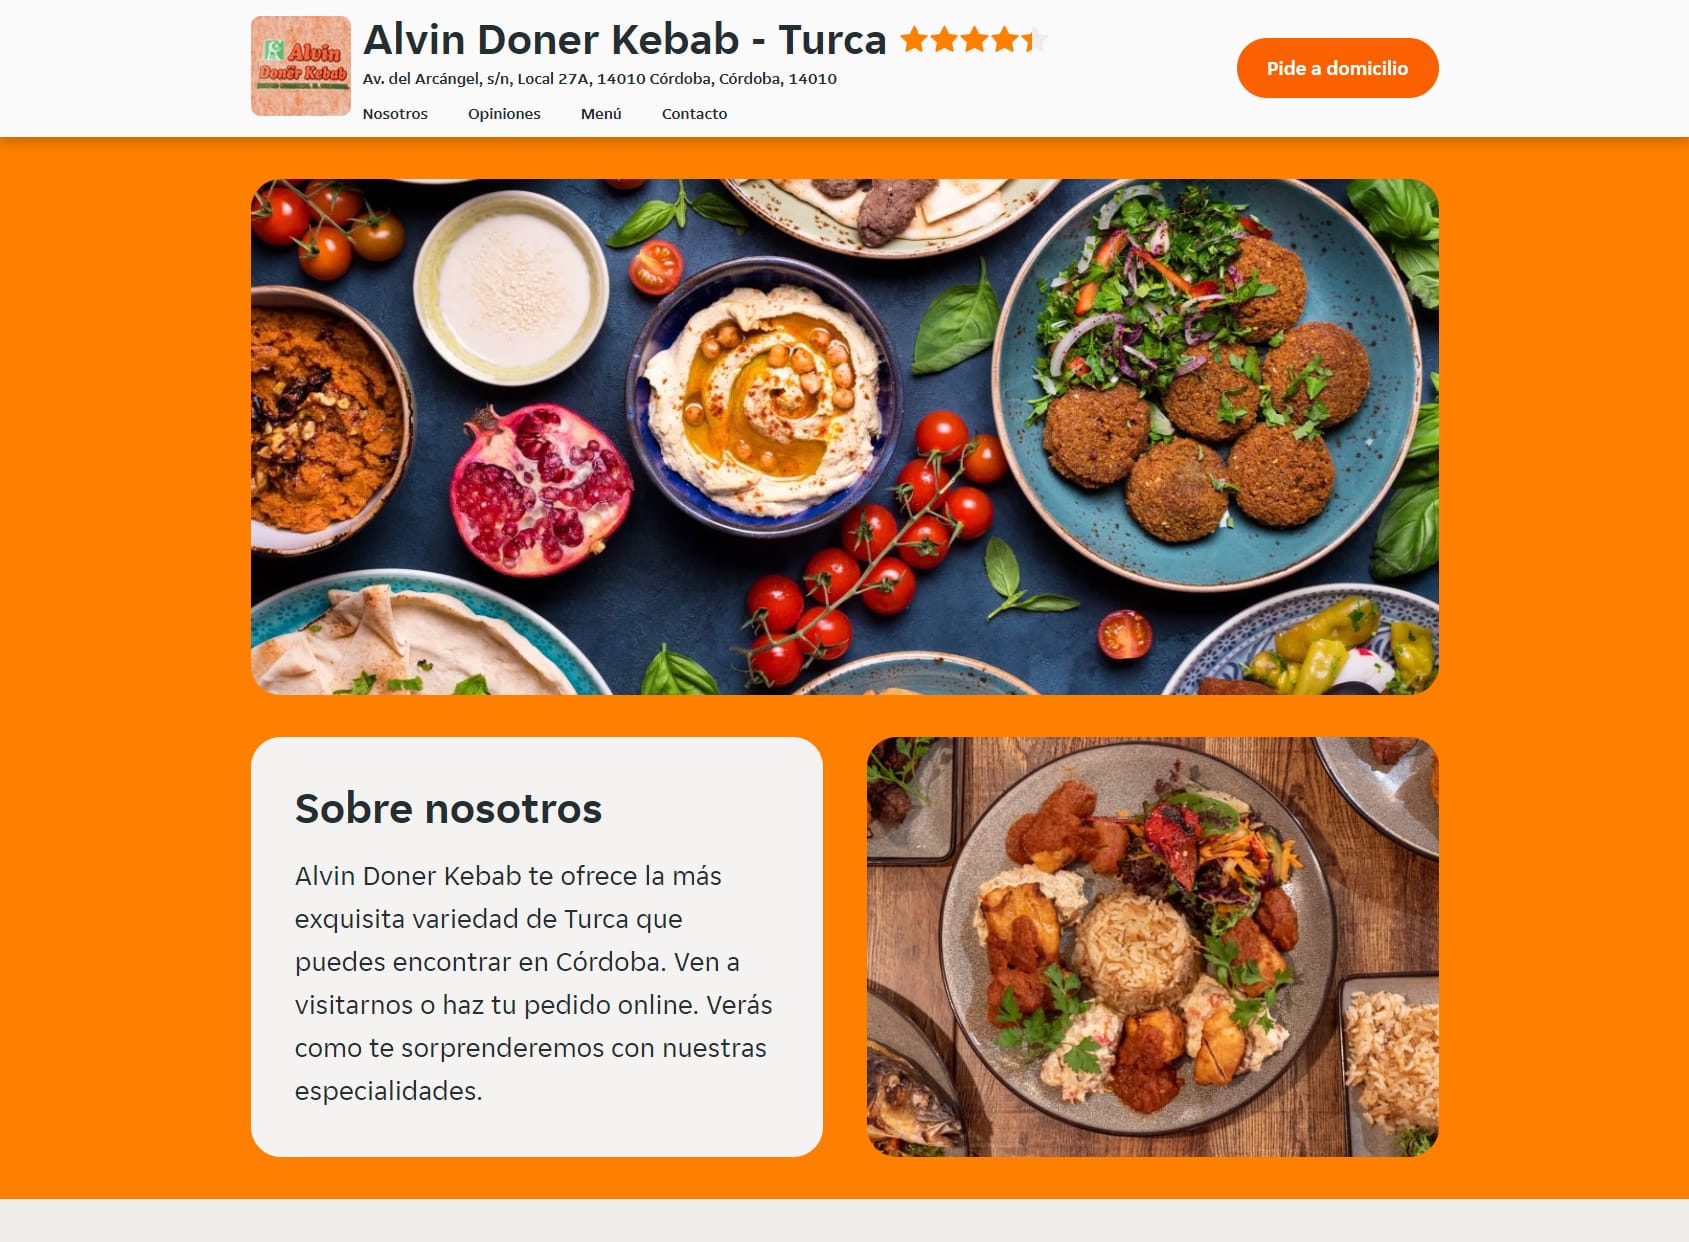 Alvin Doner Kebab